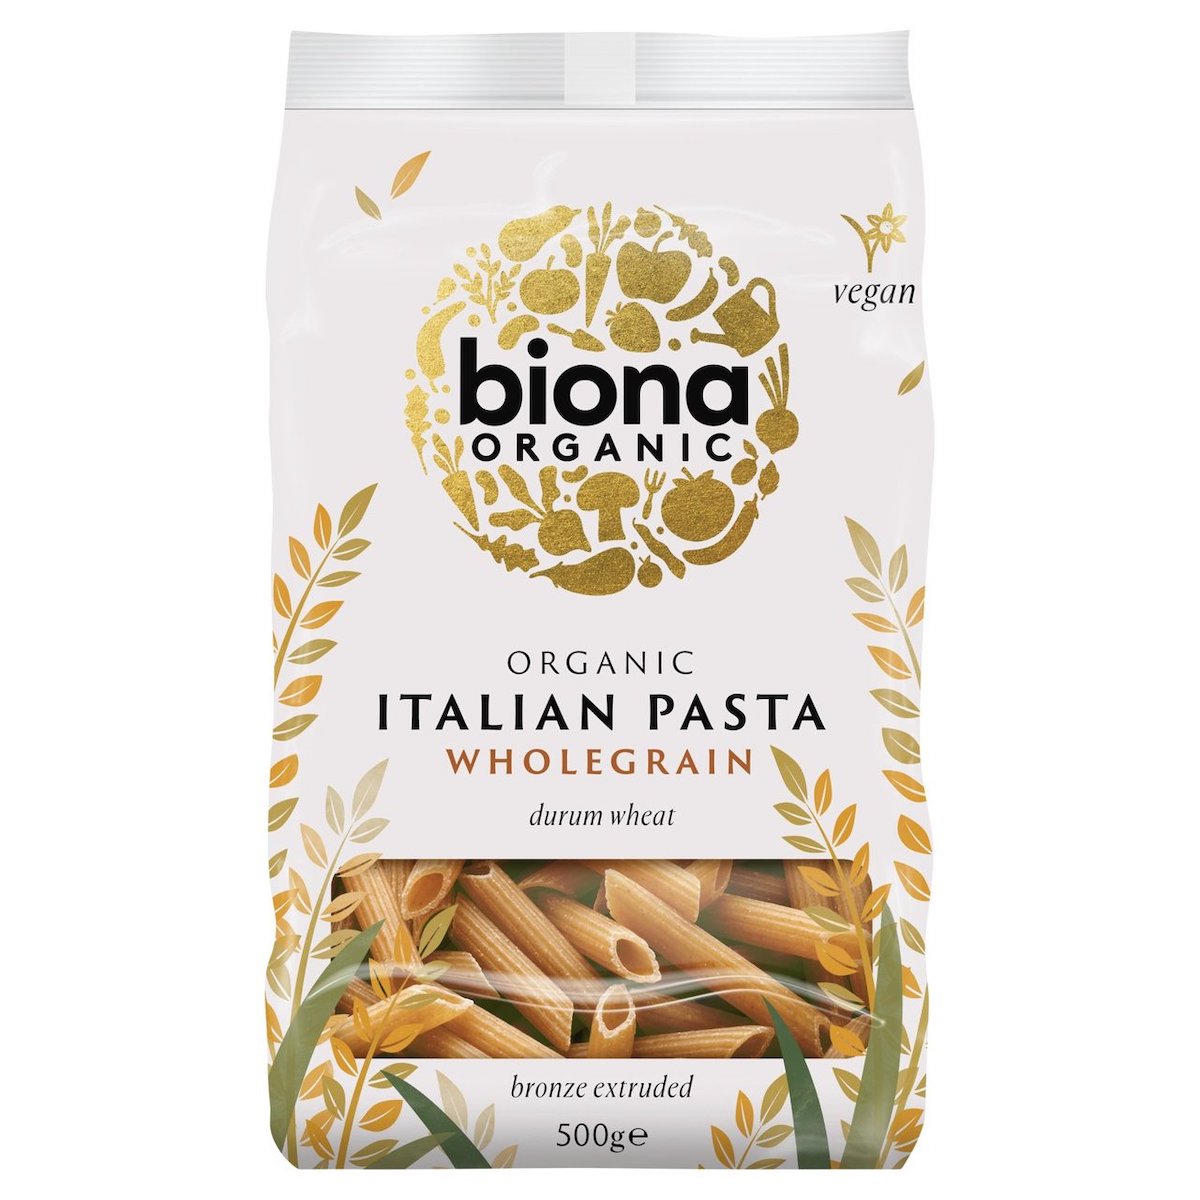 Biona Organic Wholewheat Penne Pasta 500g